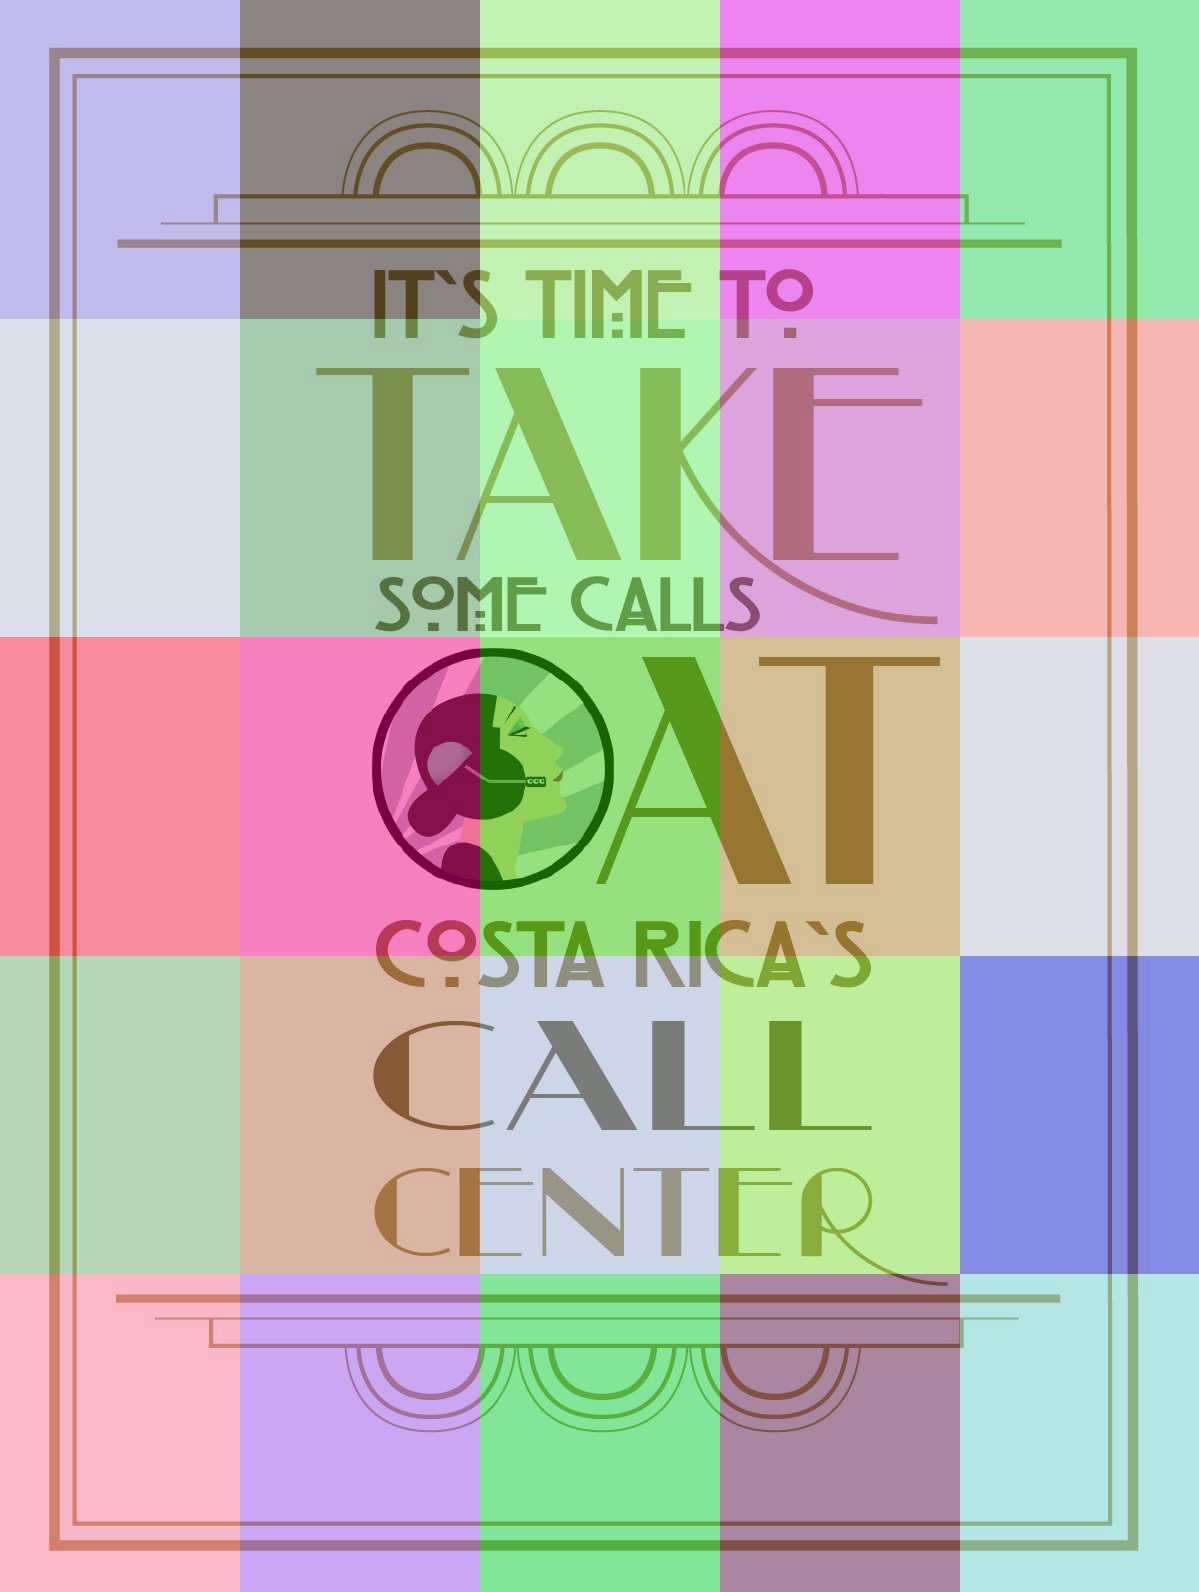 CALL CENTRE TEAM LEADER COSTA RICA.jpg  by richardblank